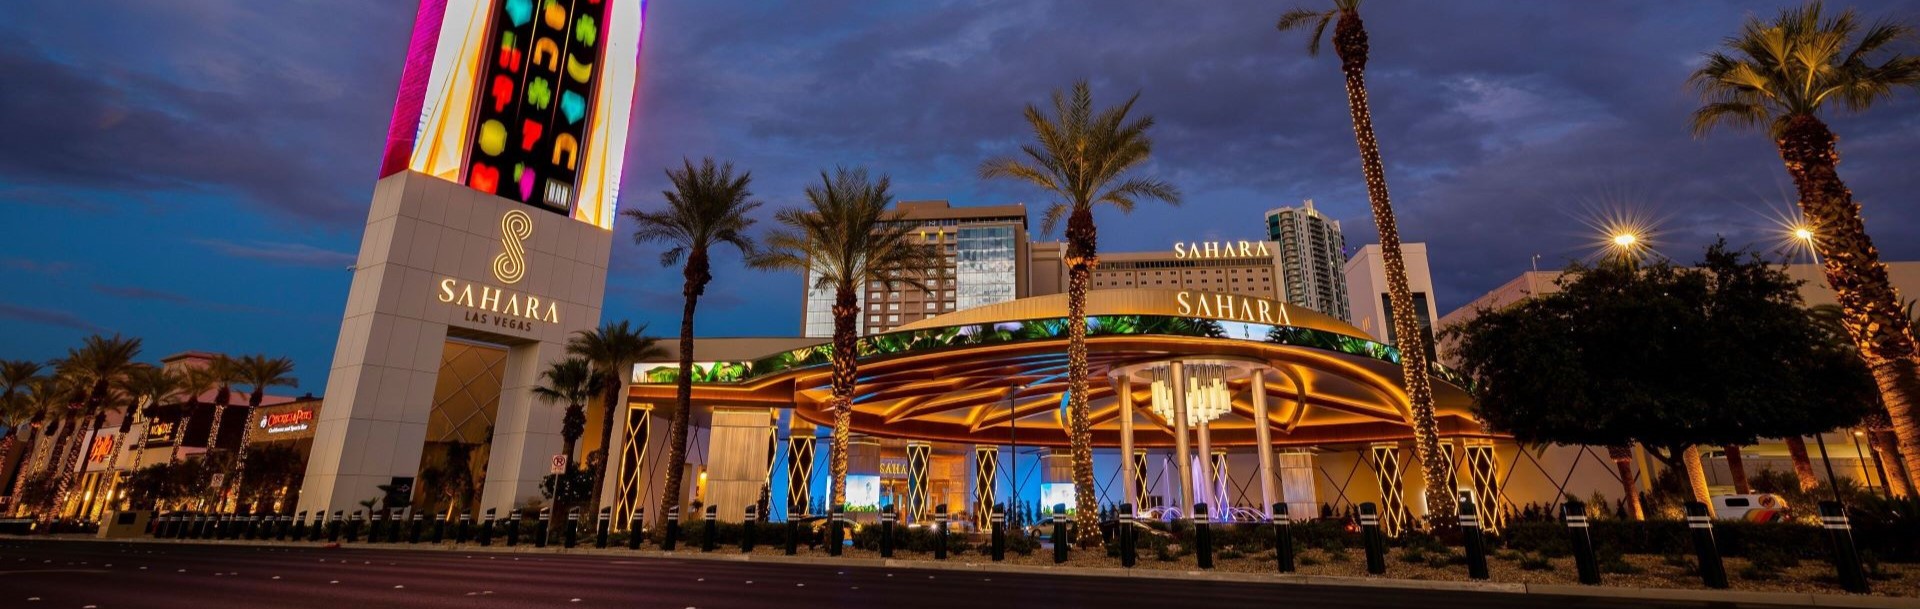 Sahara Hotel, Las Vegas